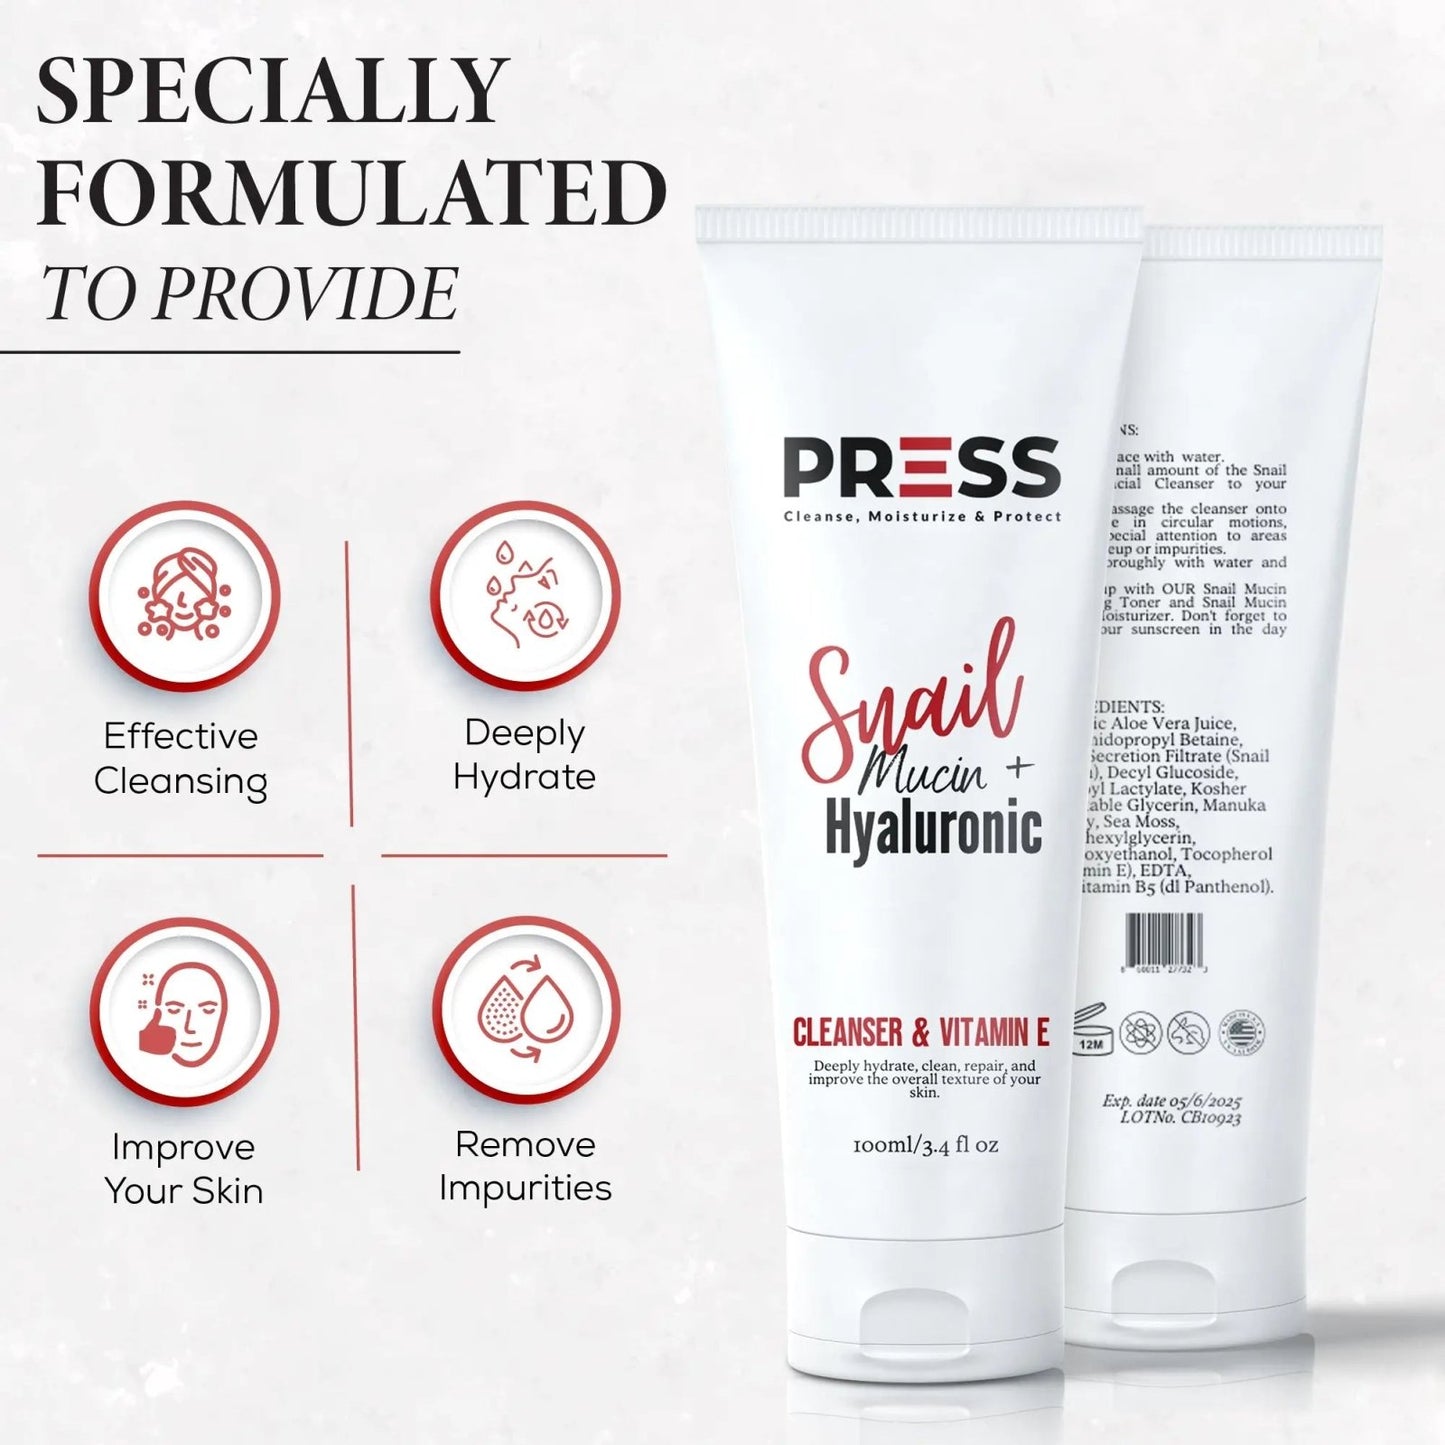 Snail + Hyaluronic  + Vitamin E Cleanser Press Skin Care